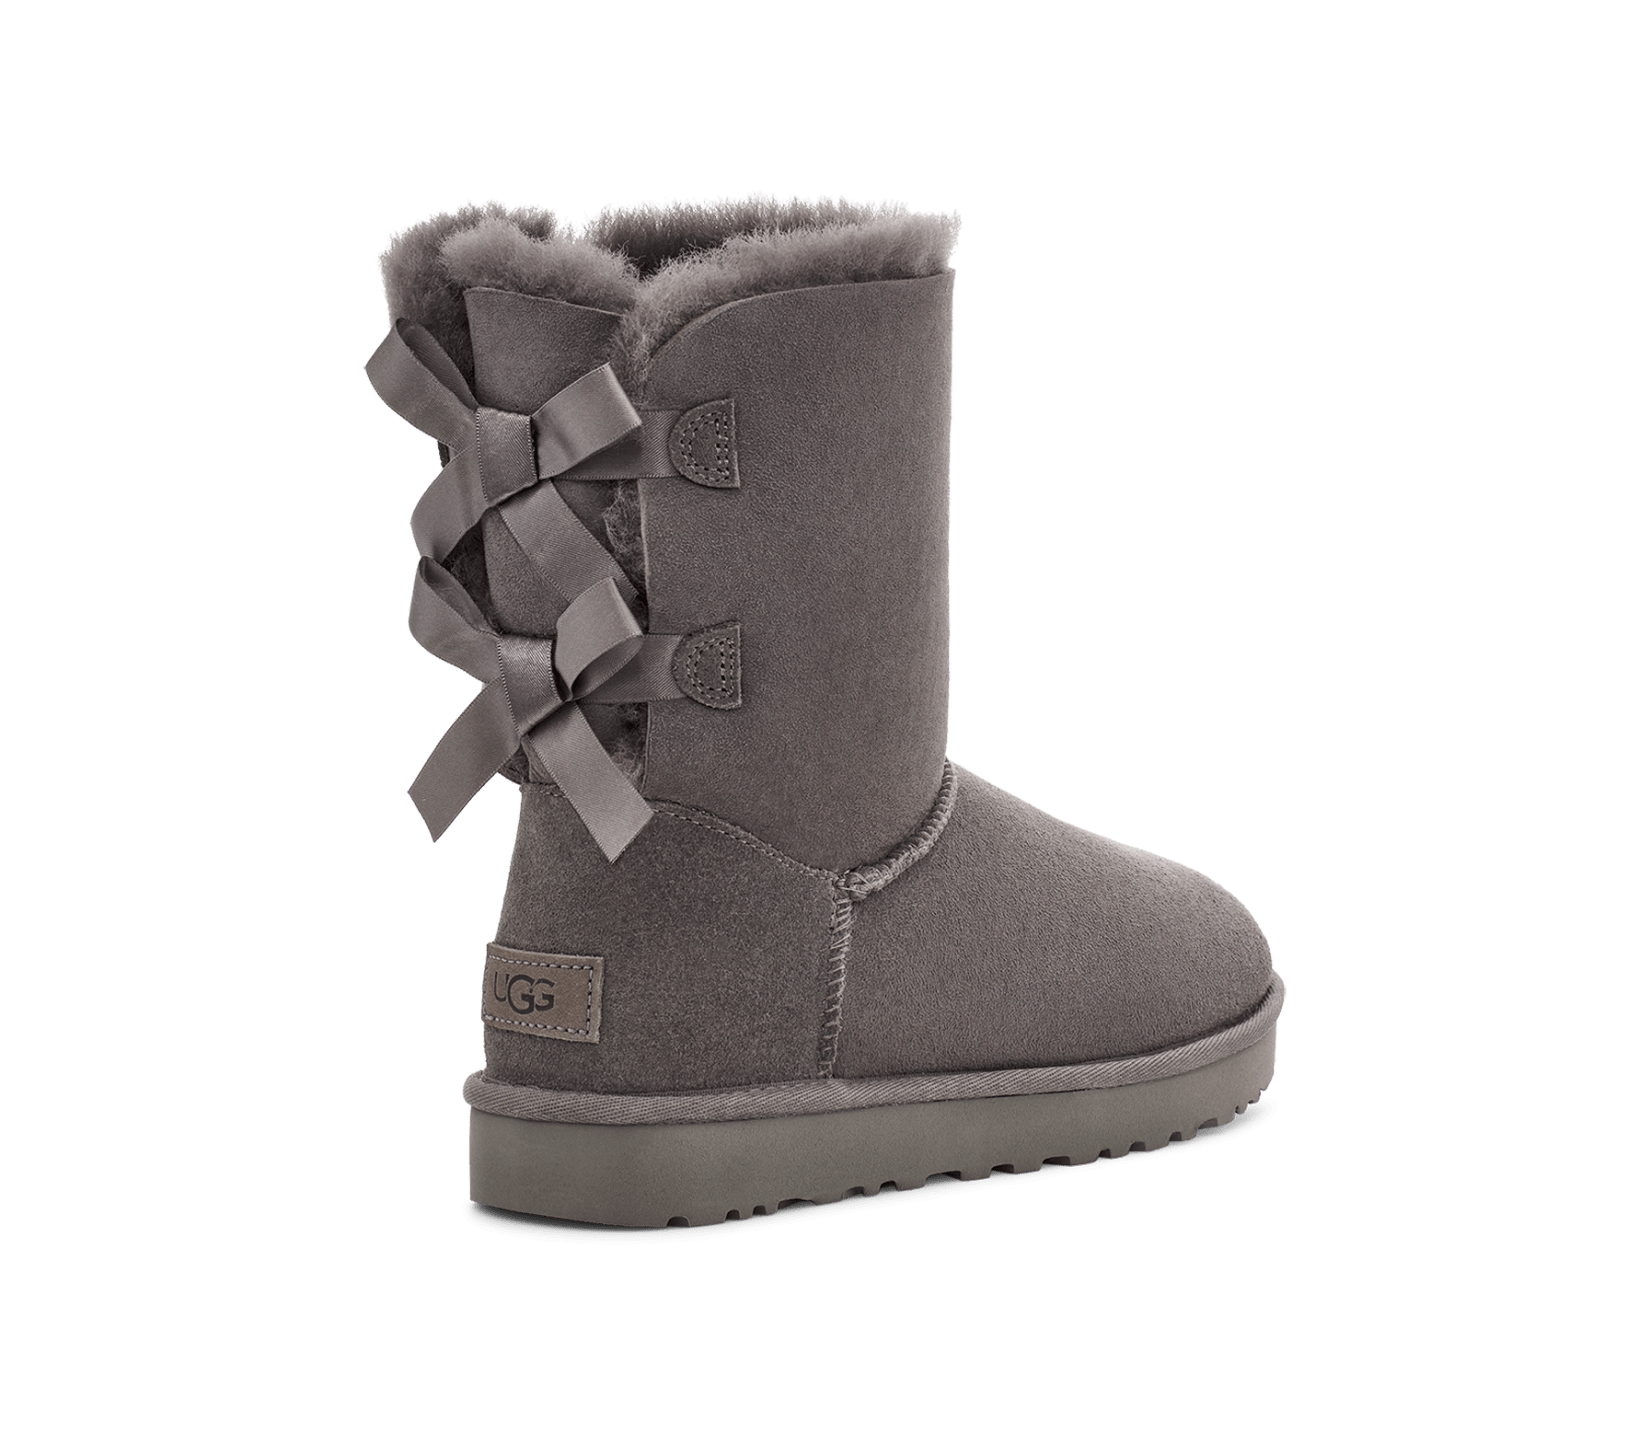 UGG MINI BAILEY BOW - Winter boots - slate/brown - Zalando.de